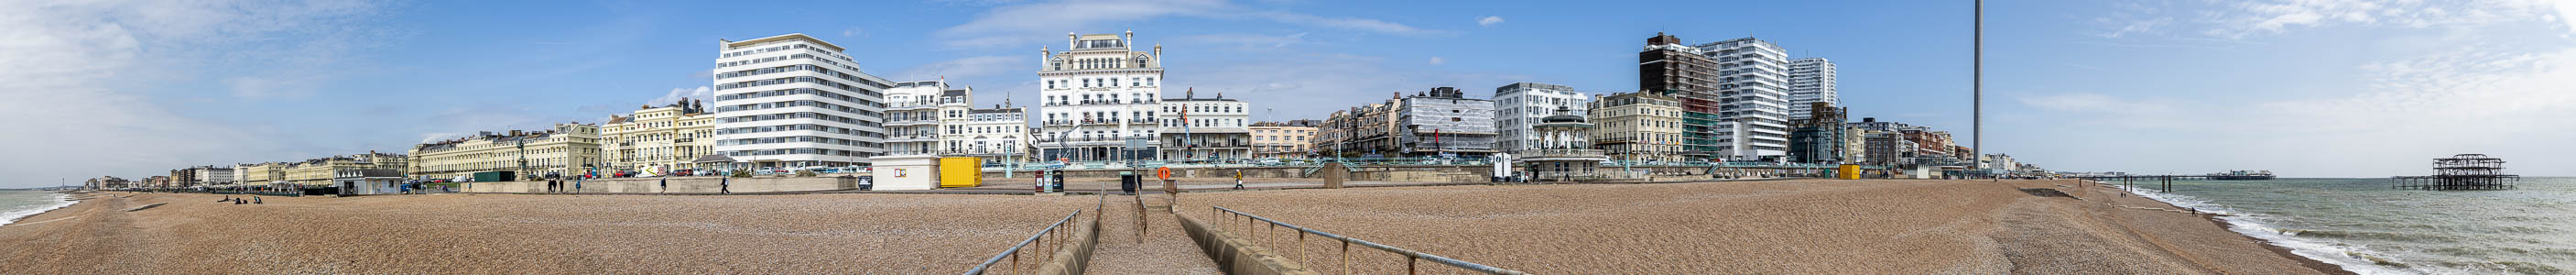 Brighton Beach, King's Road, Ärmelkanal (English Channel), Brighton Pier, West Pier Brighton